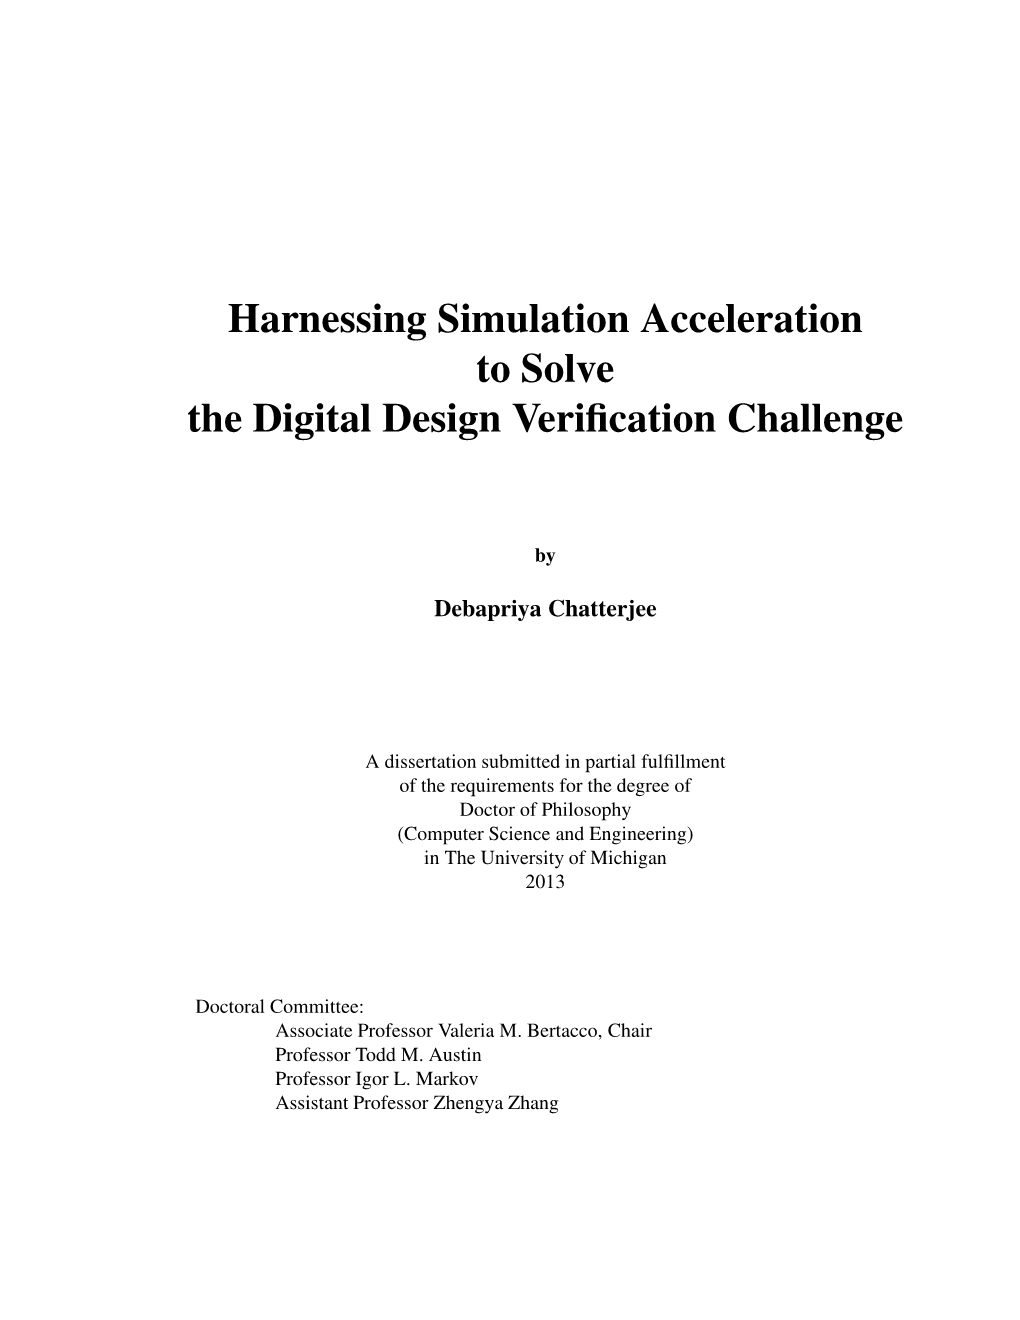 Harnessing Simulation Acceleration to Solve the Digital Design Verification Challenge